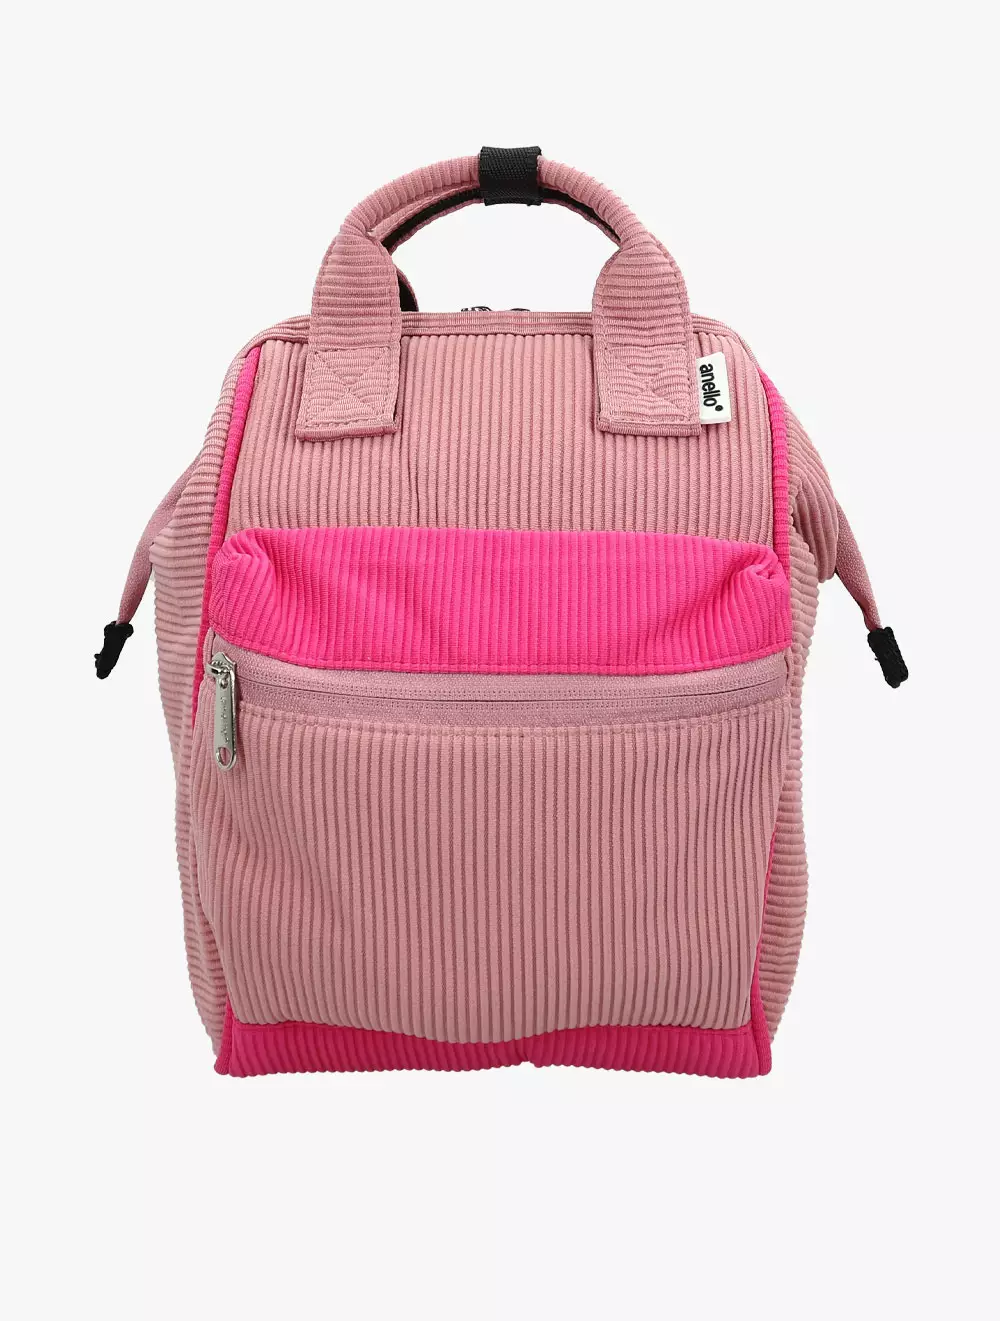 Anello Cross Bottle Kuchigane 2 Way Micro Shoulder Bag (Pink/Beige)